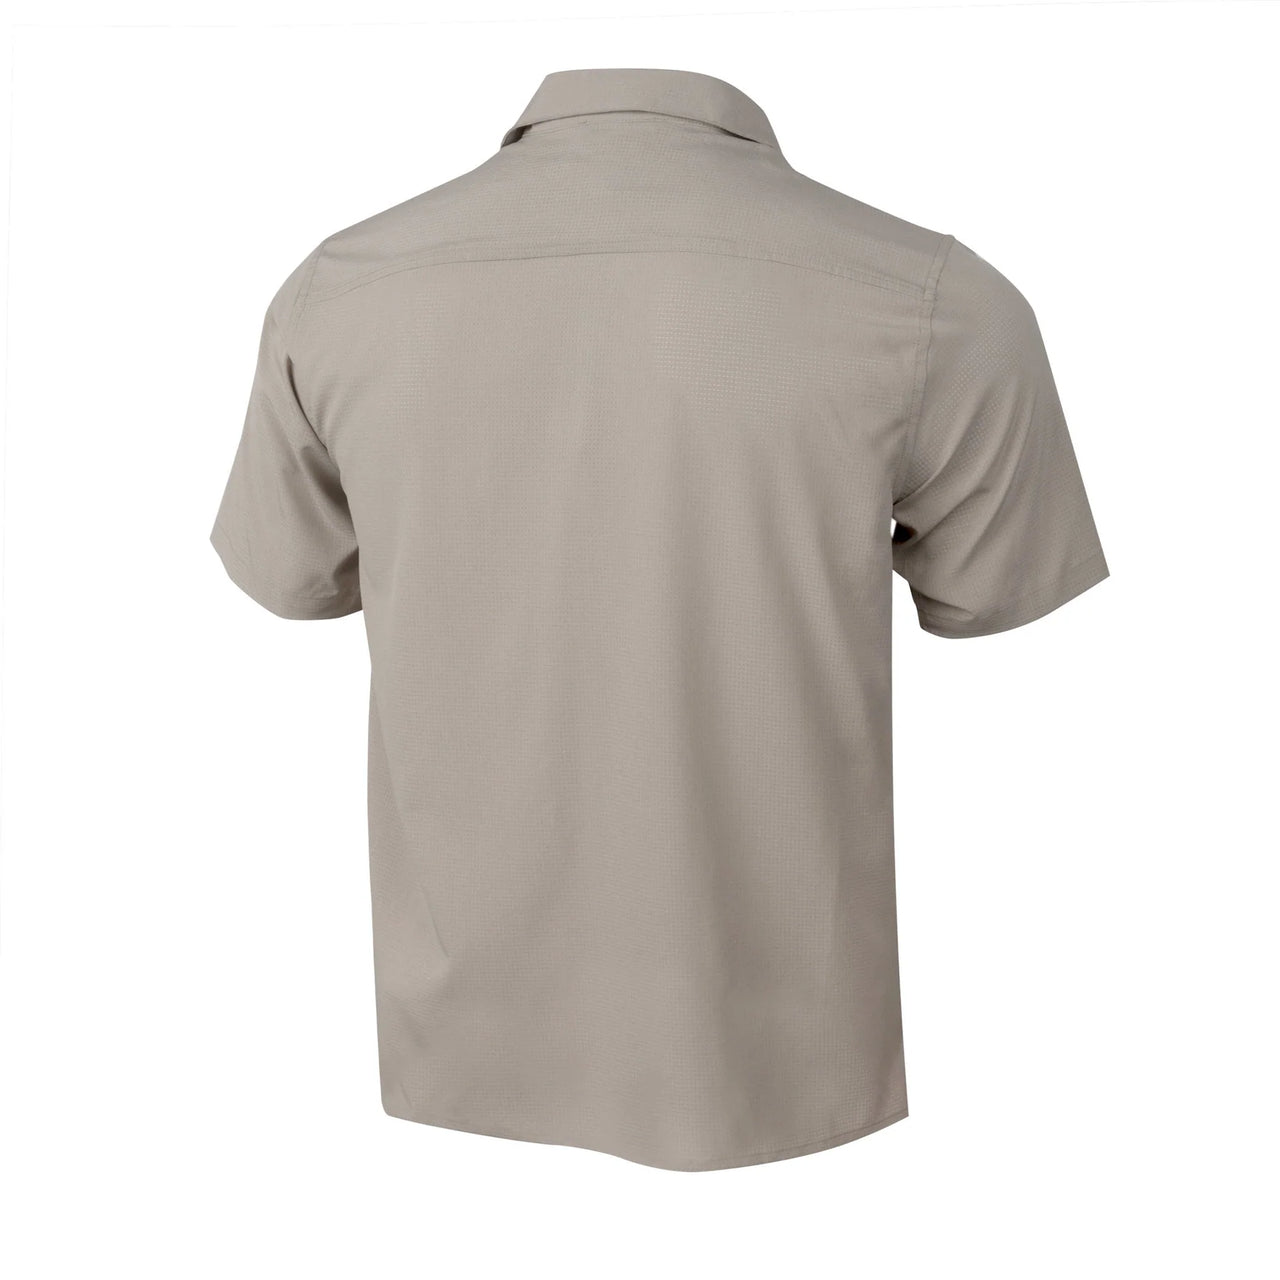 Florence Marine X - Airtex Expedition Short Sleeve Shirt